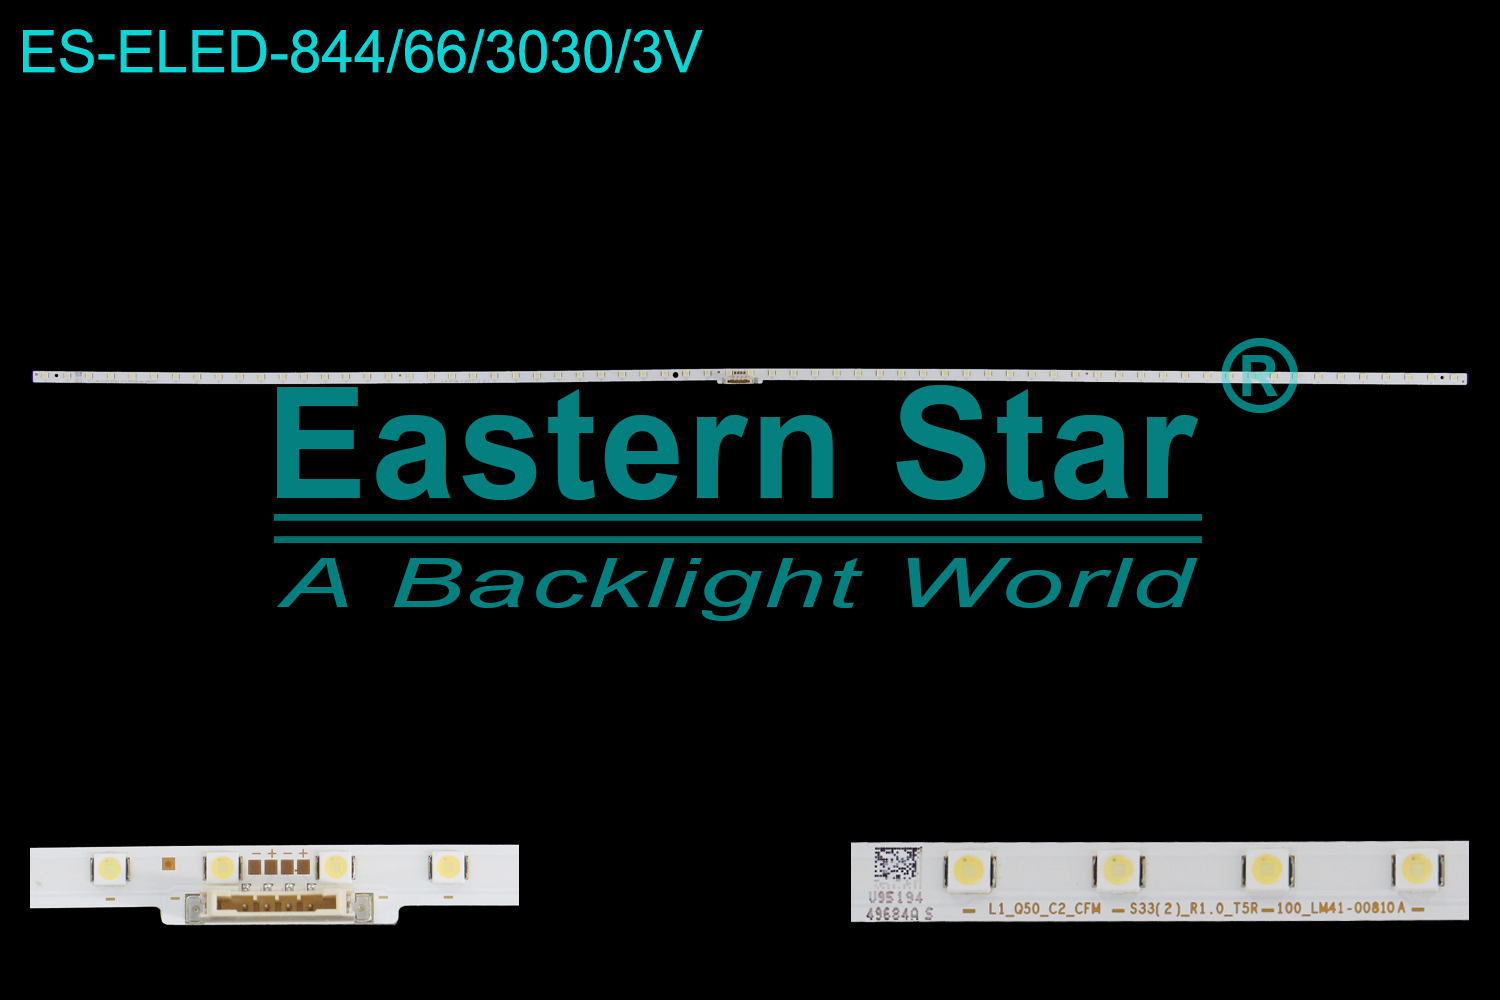 ES-ELED-844 ELED/EDGE TV backlight use for 32'' Samsung QN32Q50RAFXZA U95194 49684A L1_Q50_C2_CFN S33(2)_R1.0_T5R 100_LM41-00810A Y19 Q50 32" BRACKET LED PCB BN61-16598A A7Q2  LED BACKLIGHT KITS(1)